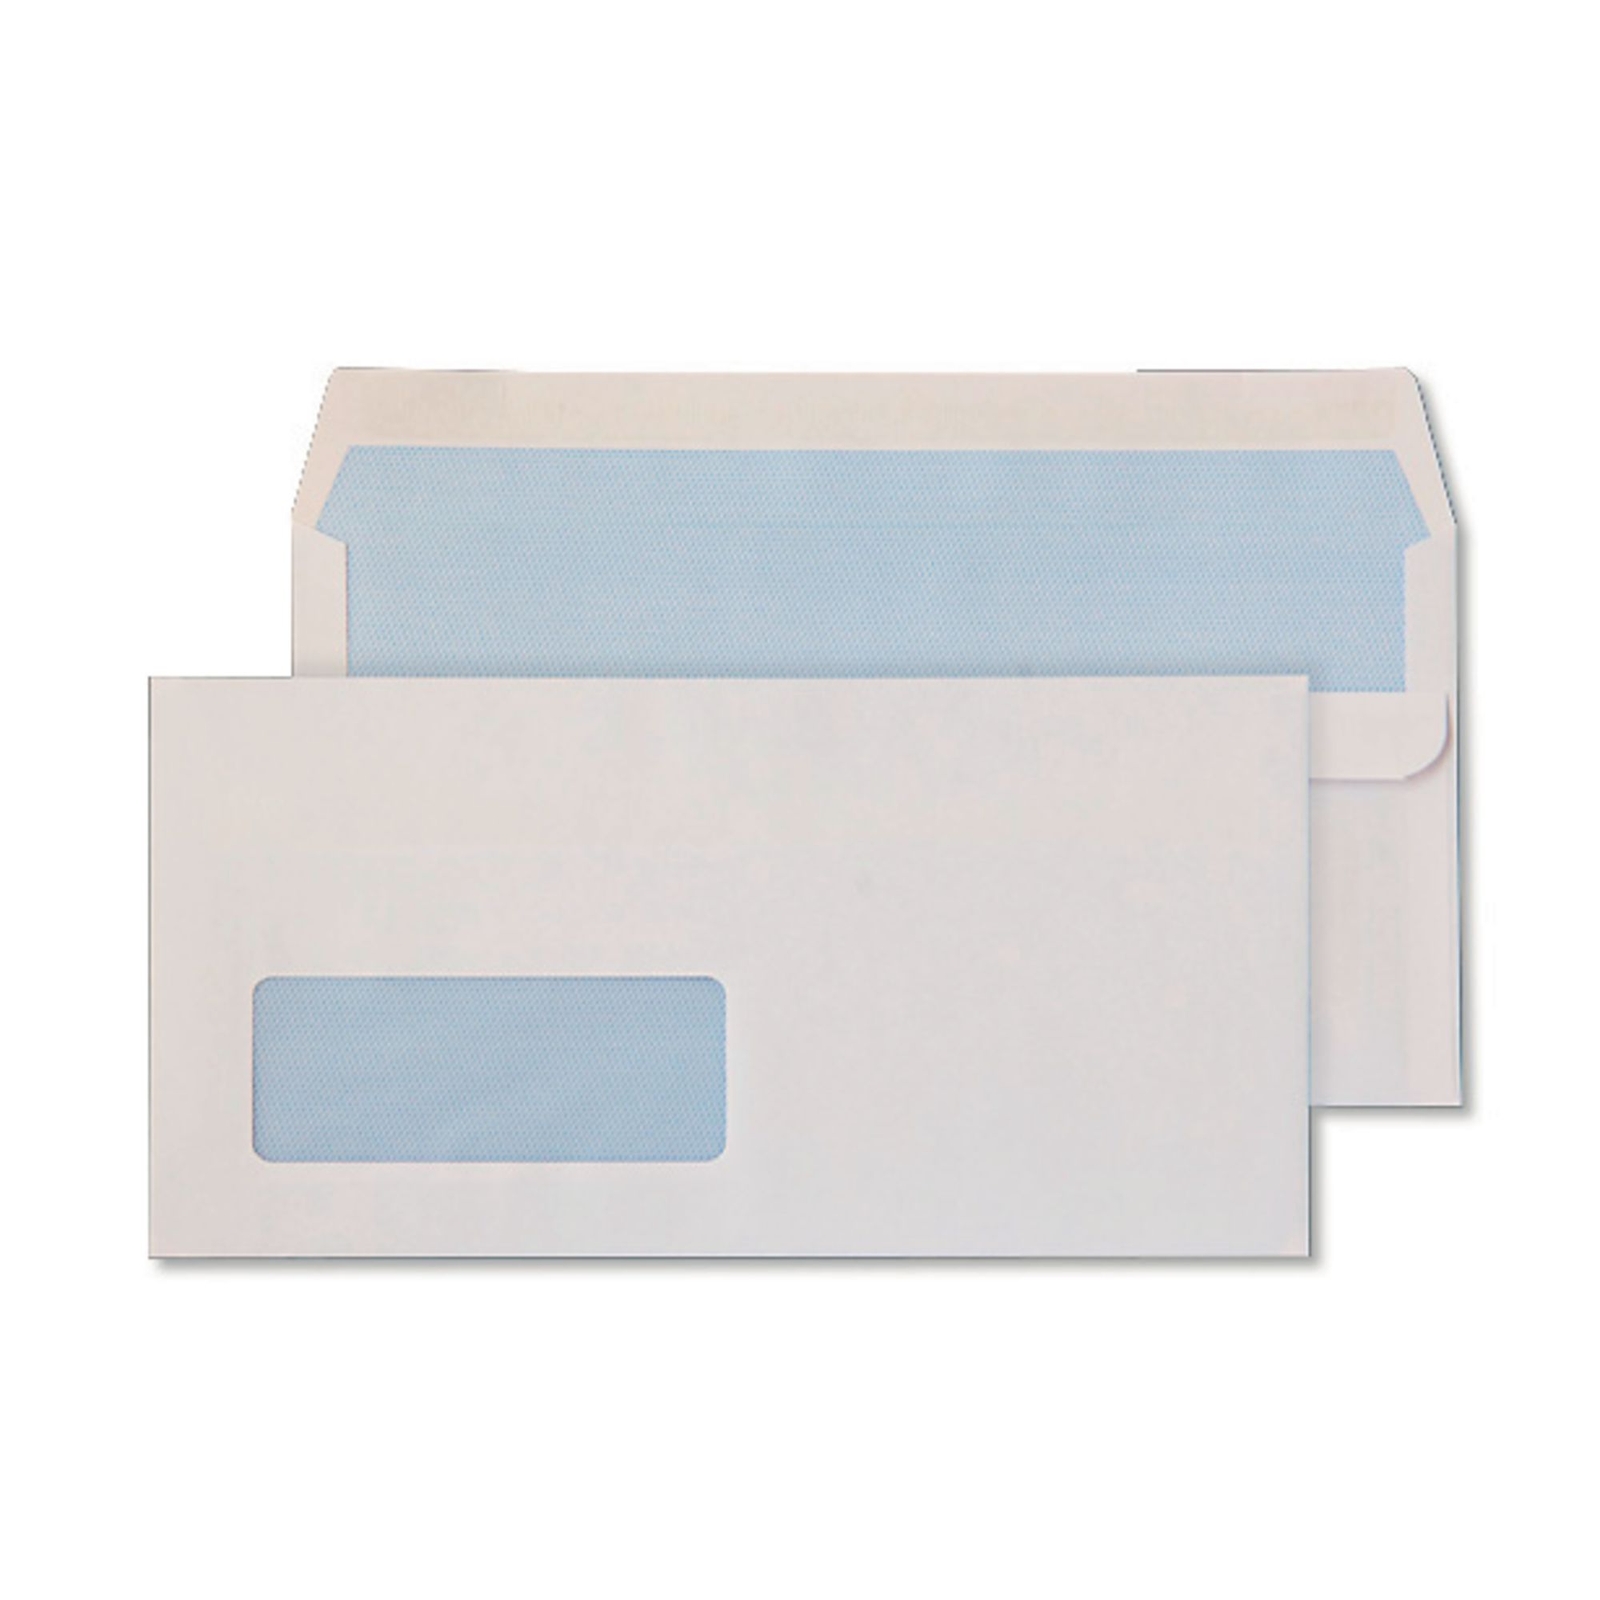 DL White Self Seal Wallet Envelopes - Box of 1000